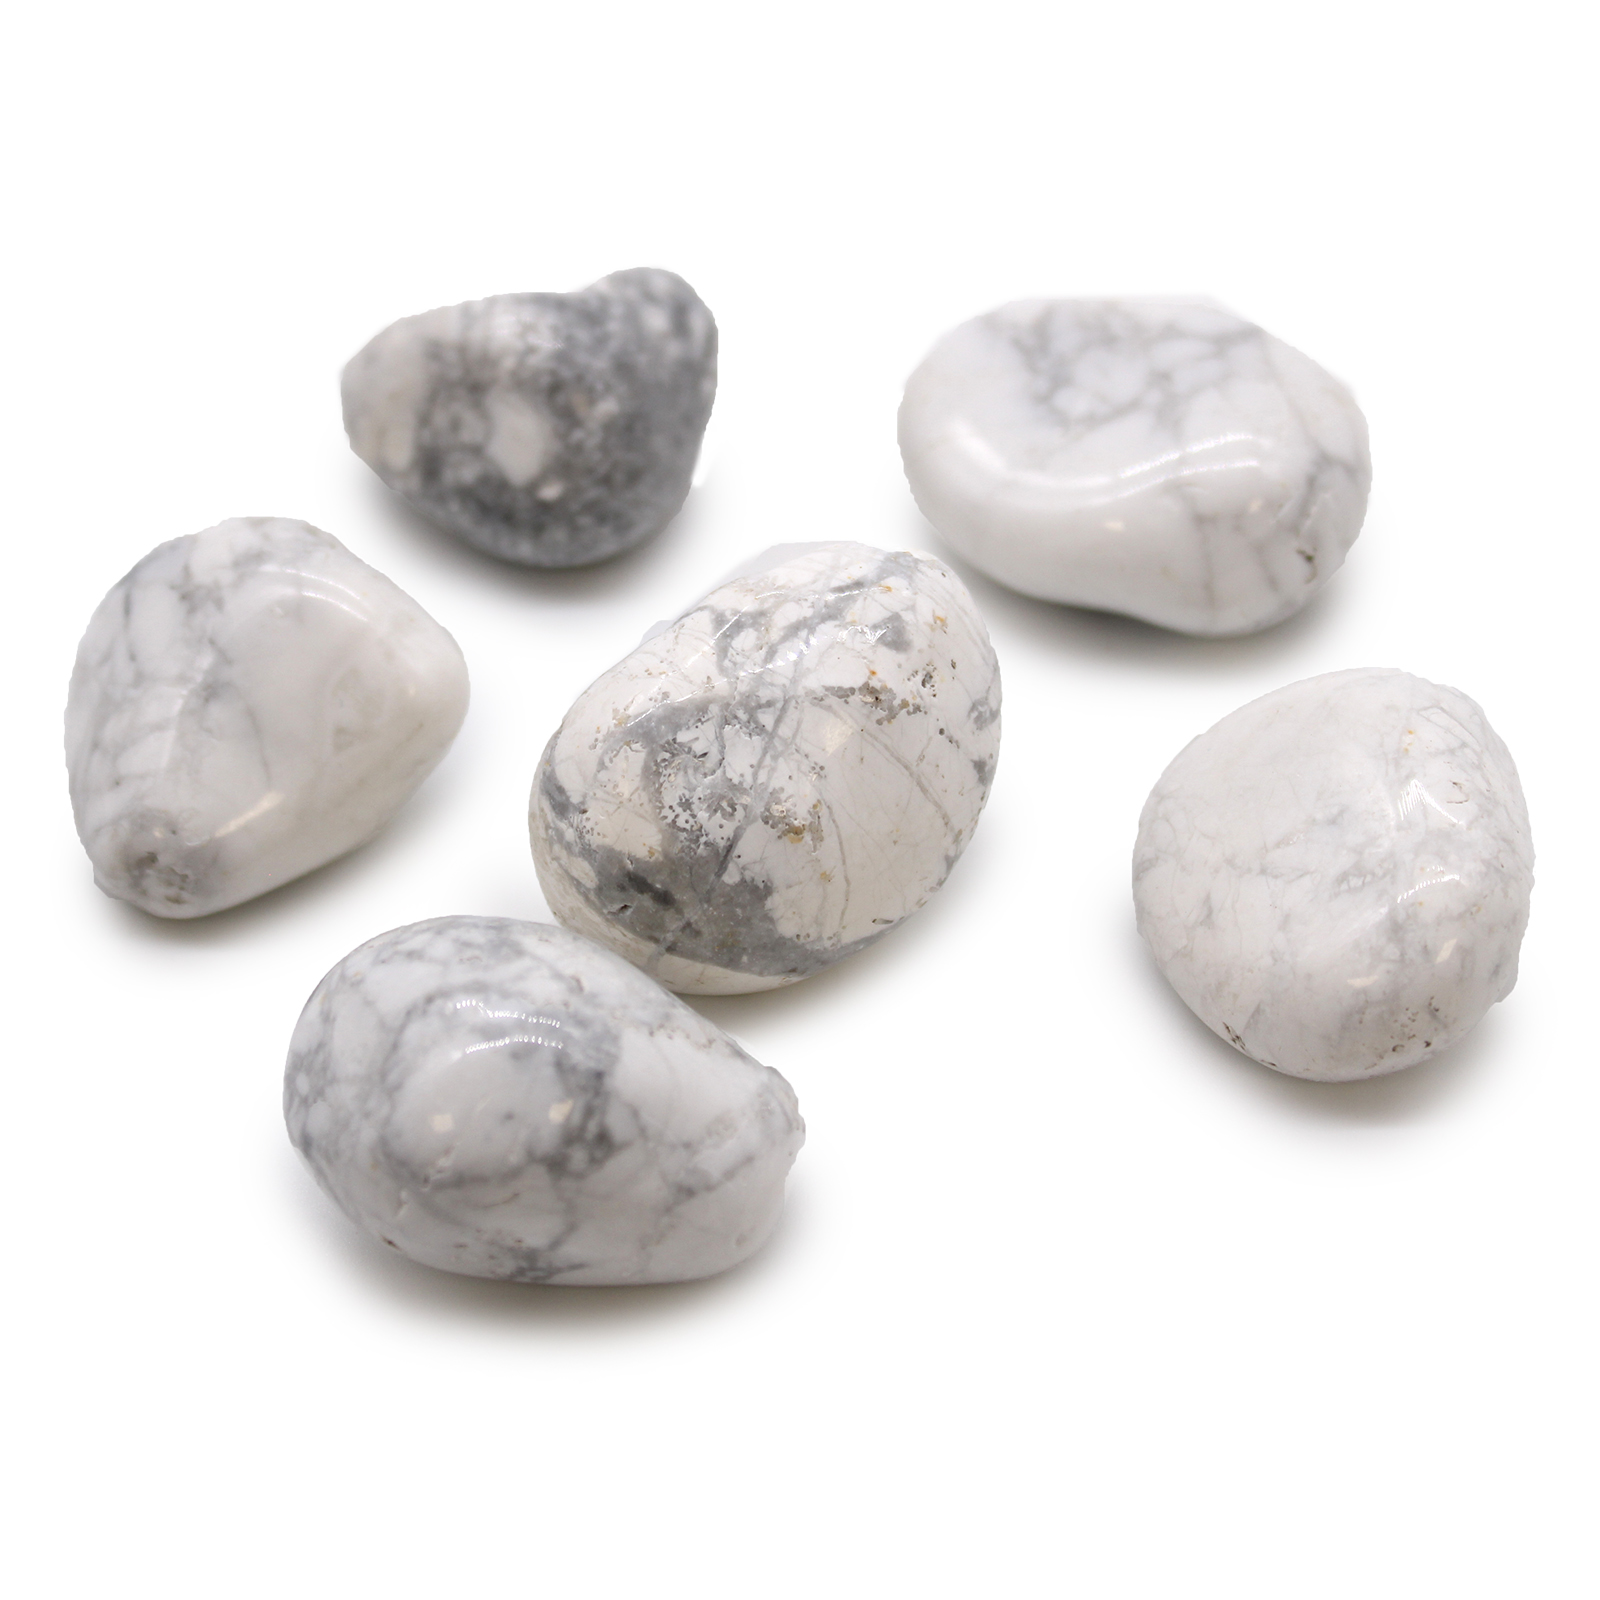 6 x Large African Tumble Stones - White Howlite - Magnesite